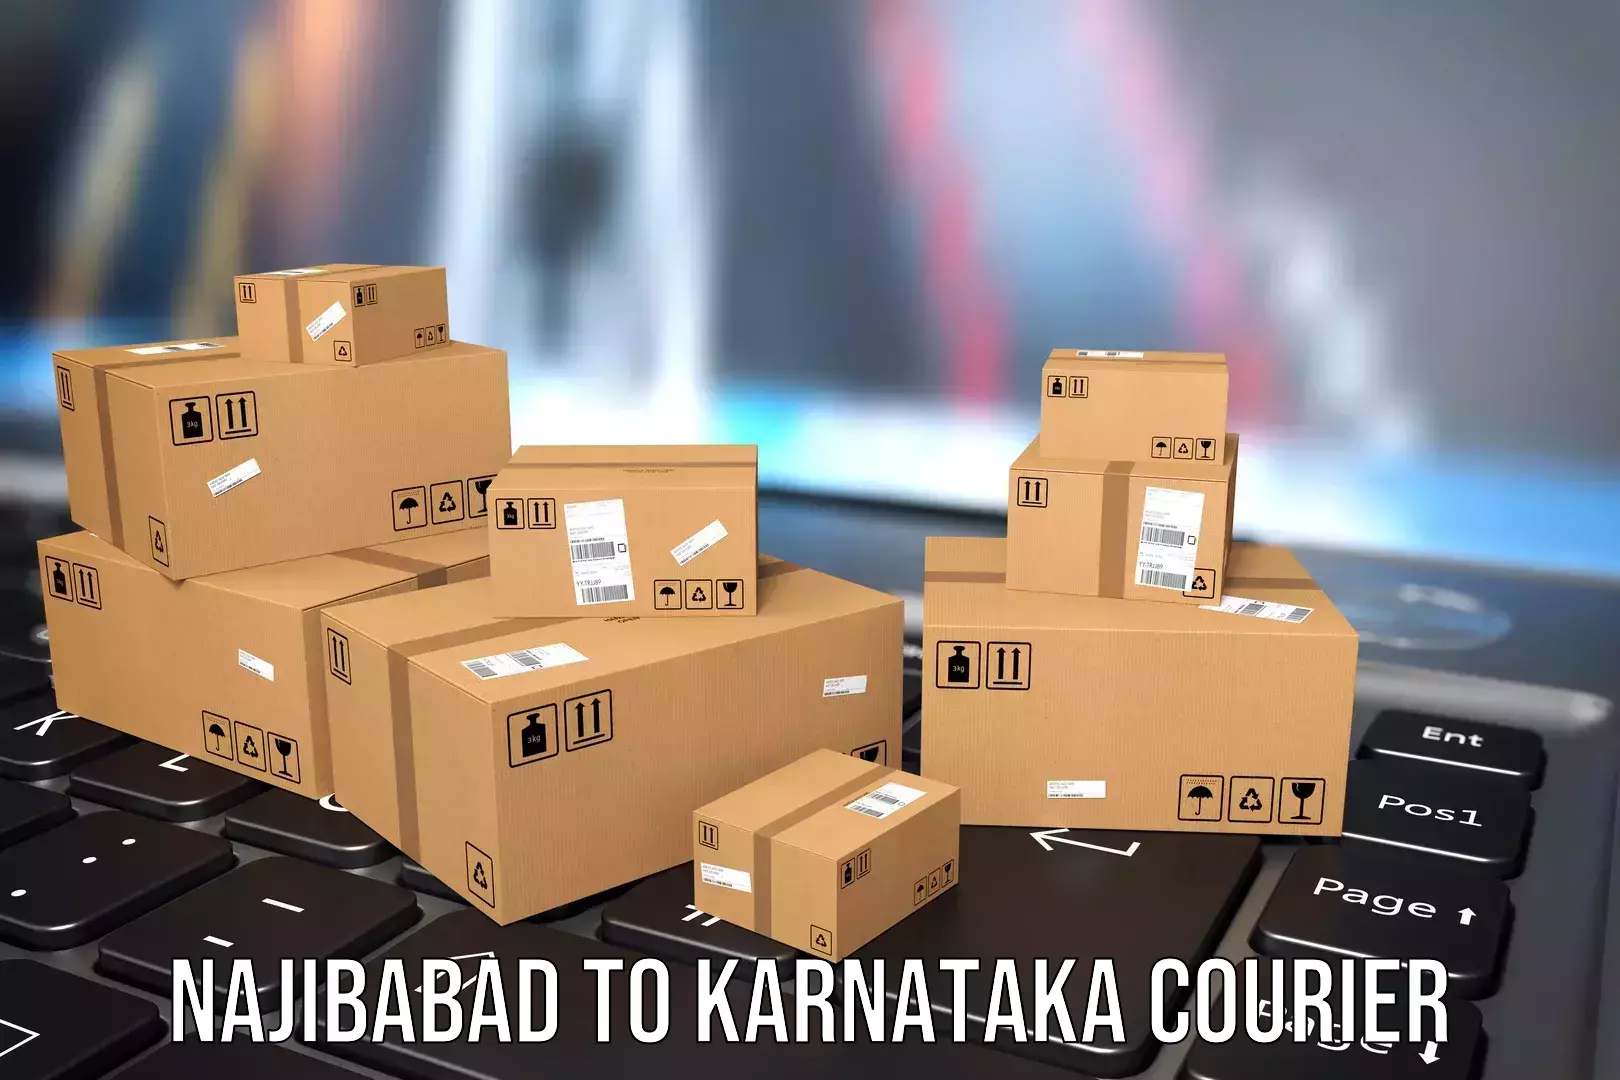 Baggage transport technology Najibabad to Karnataka